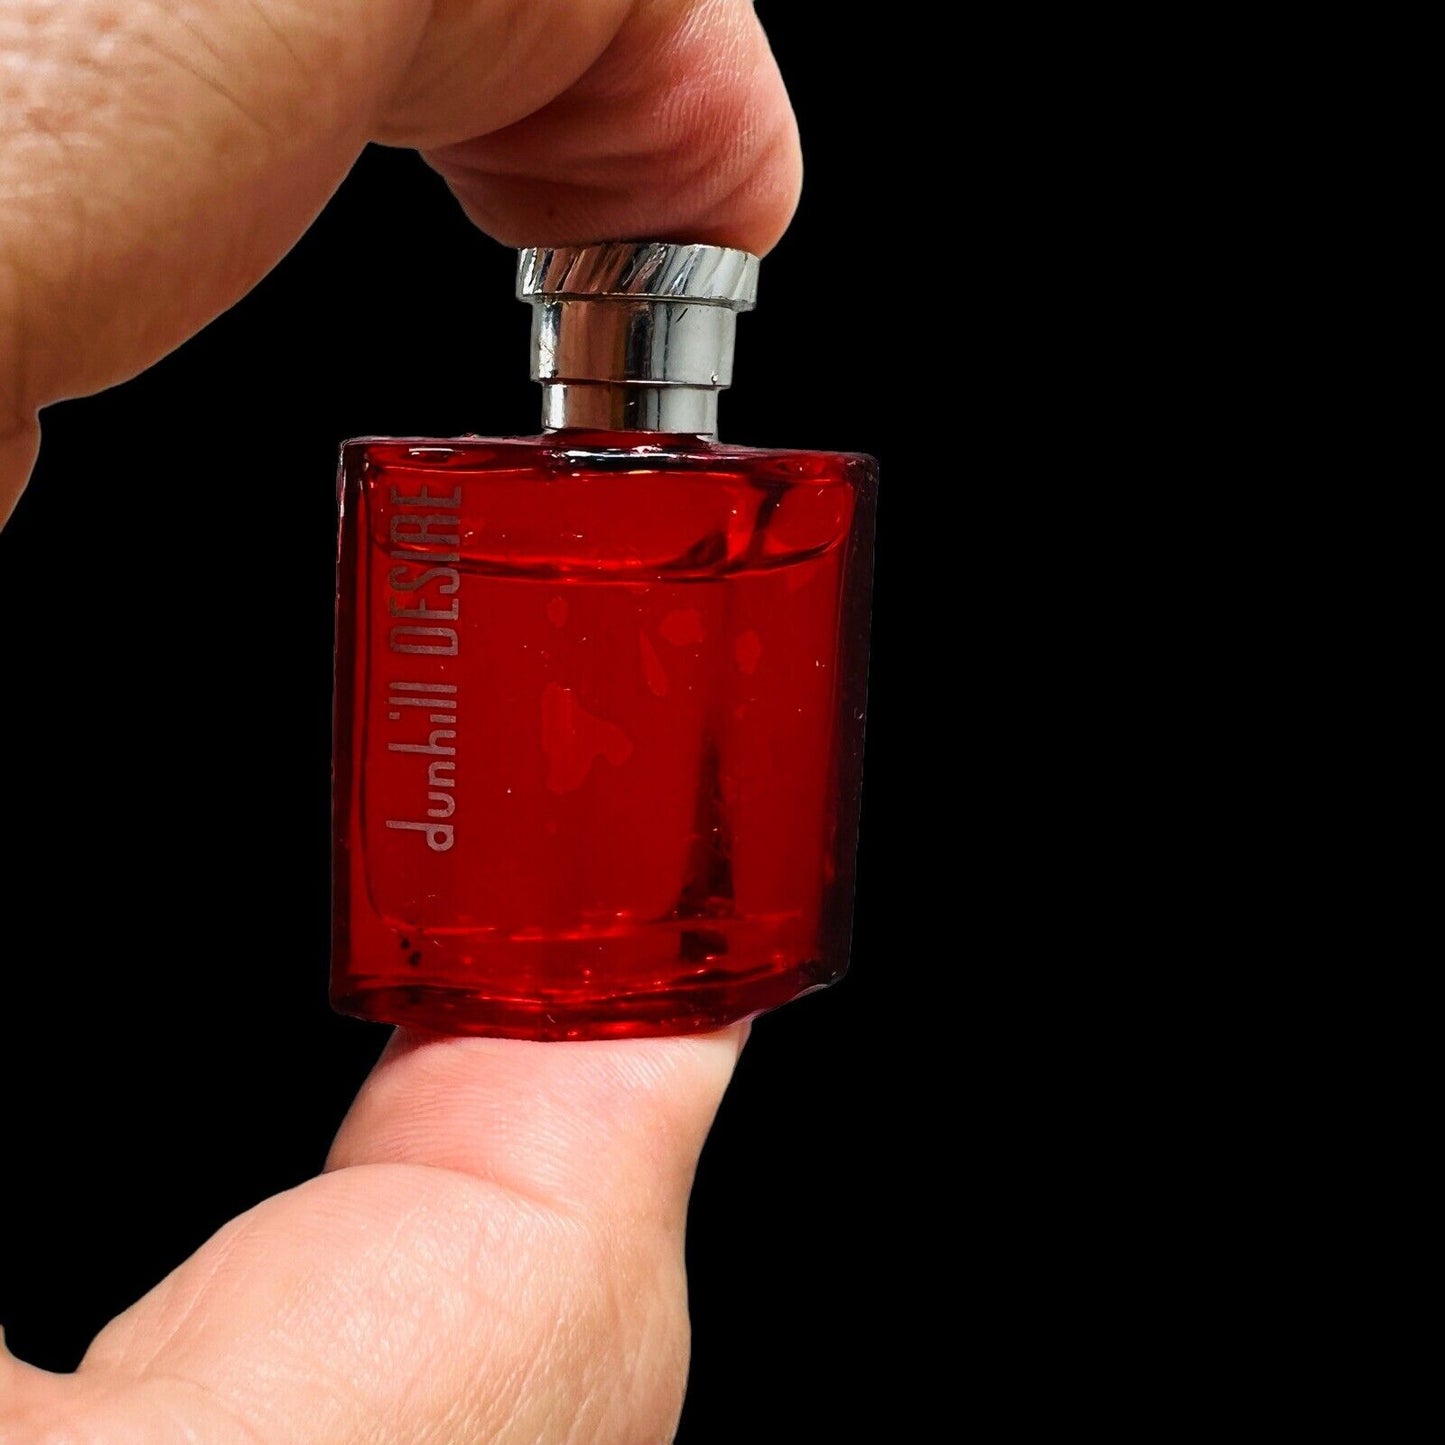 Perfume Sample Bottles Fragrances Cologne Collection Tiny Miniatures Lot Vintage